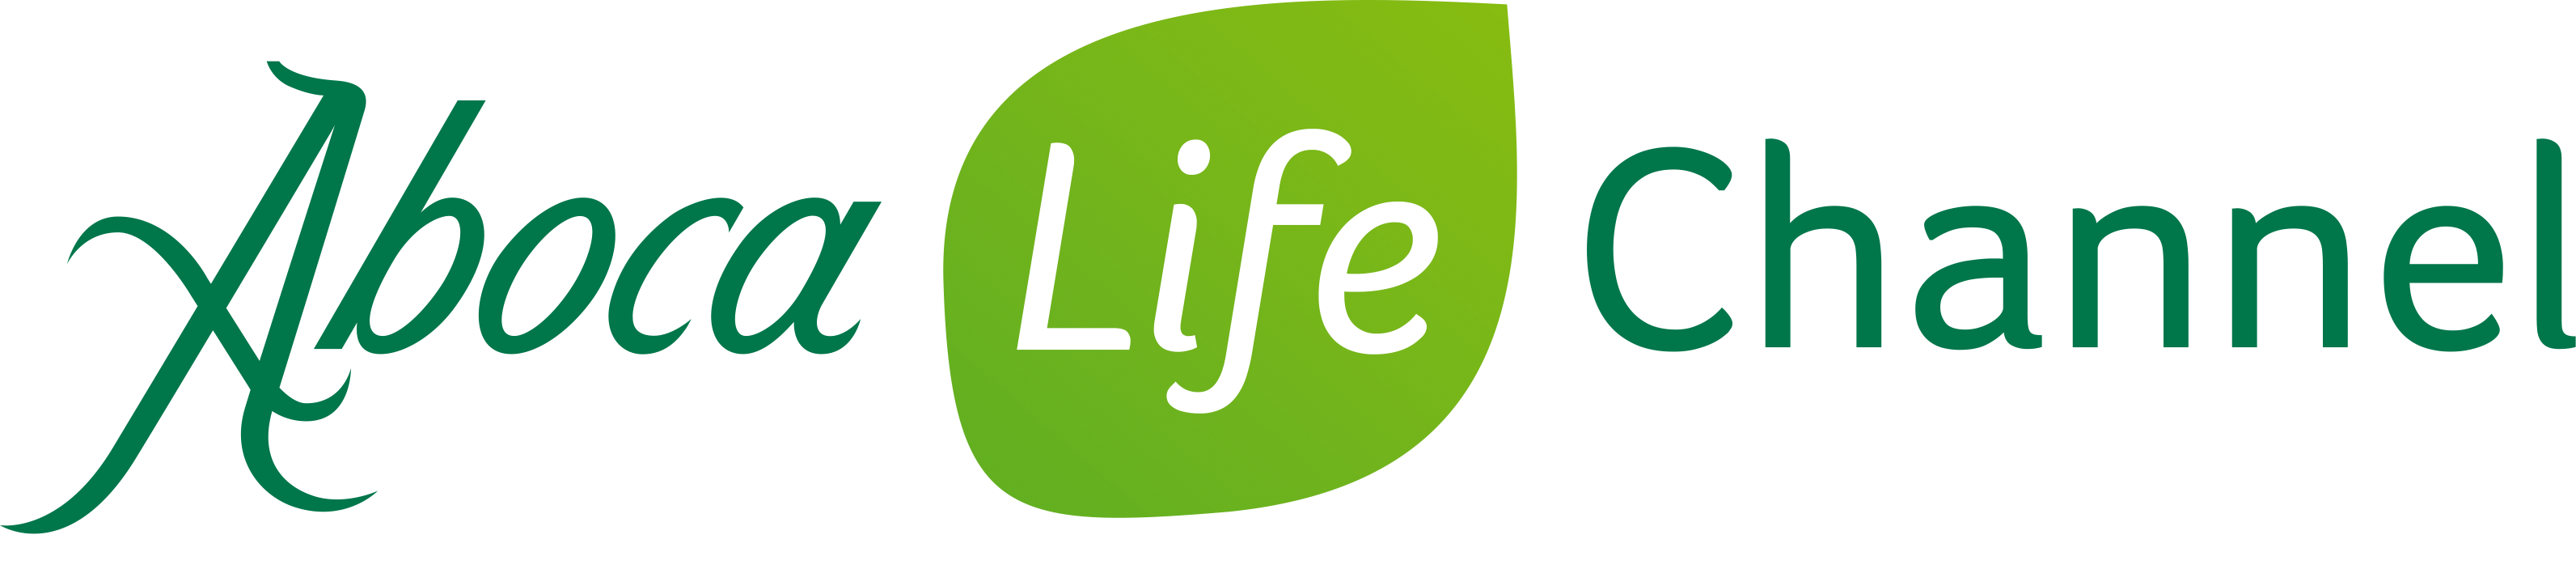 Aboca-LIFE-Channel-logo